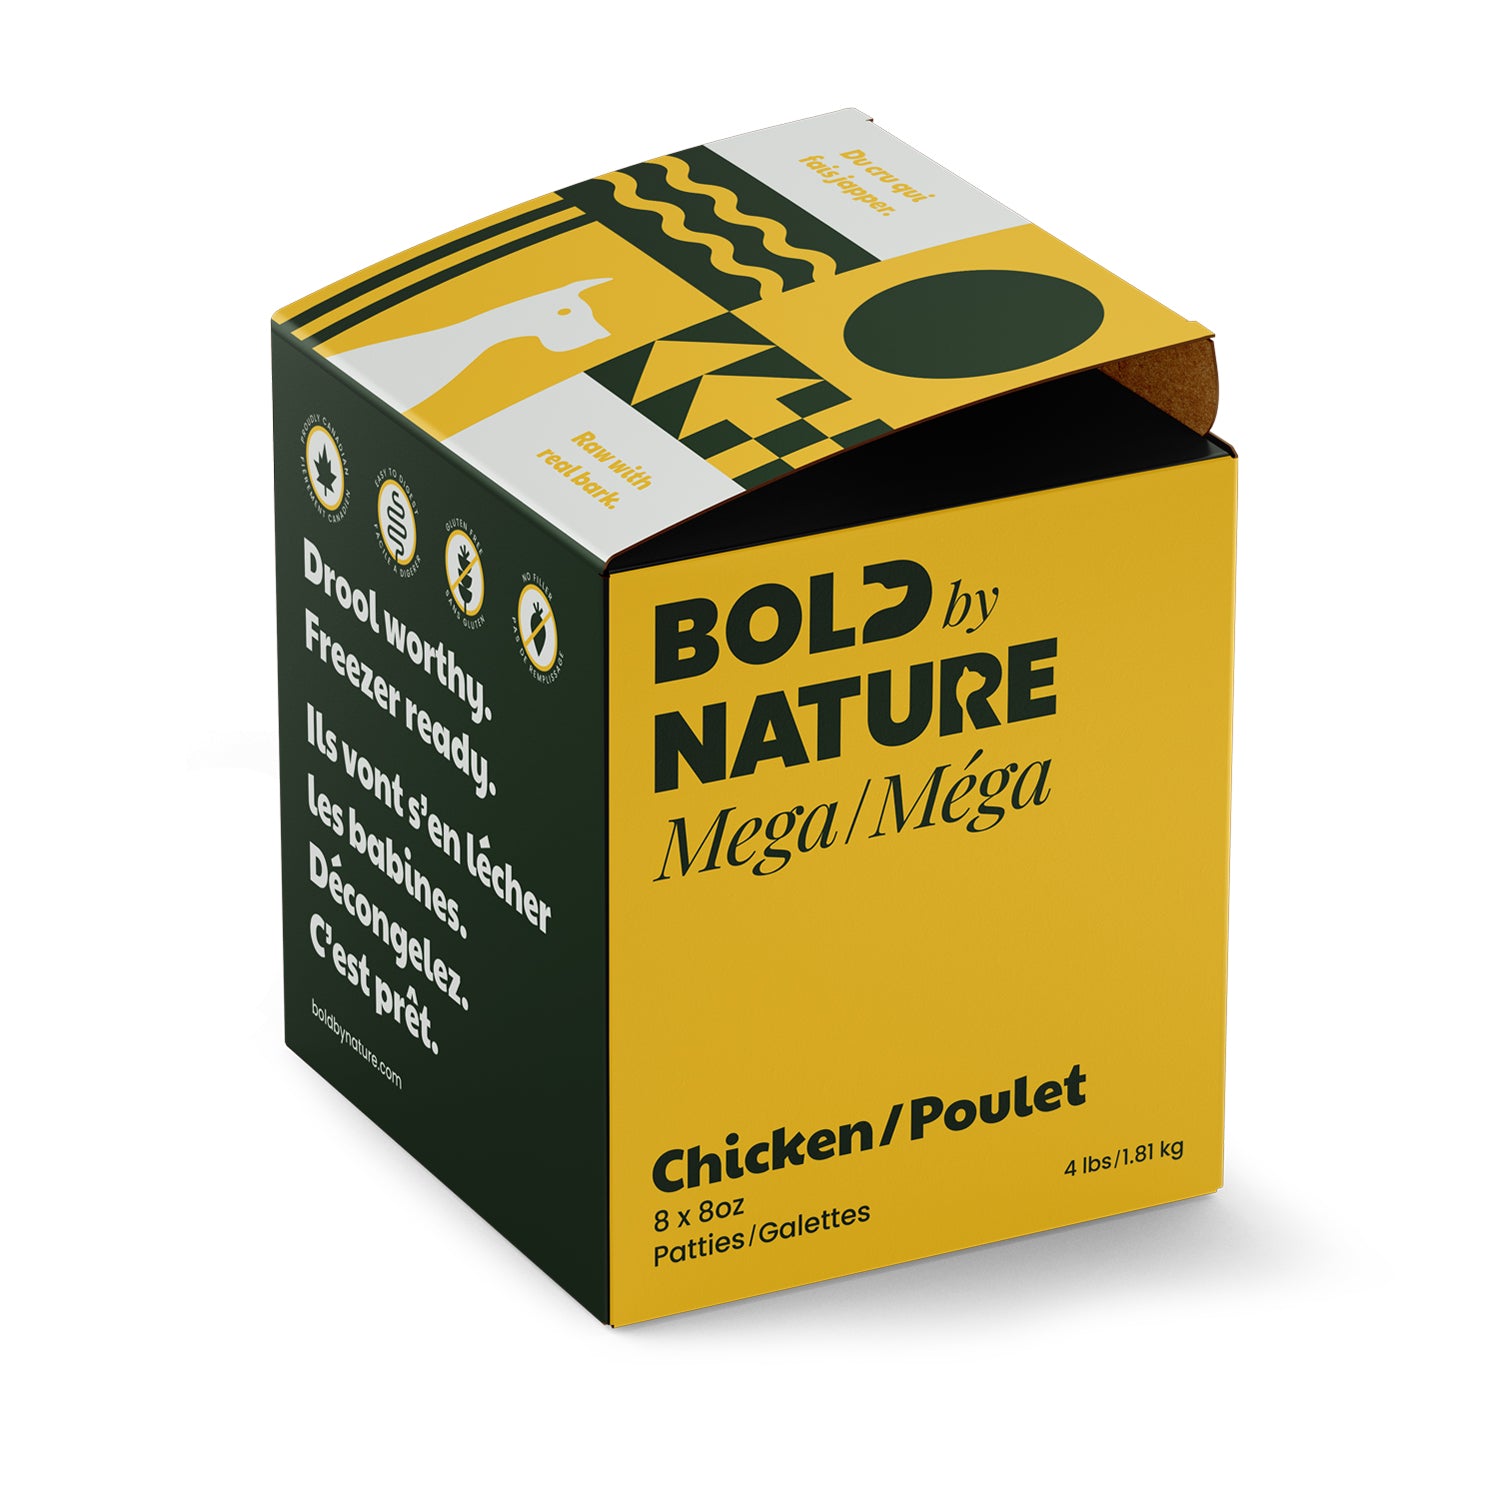 Bold by Nature (Mega Dog) - Mega Chicken - Frozen Product